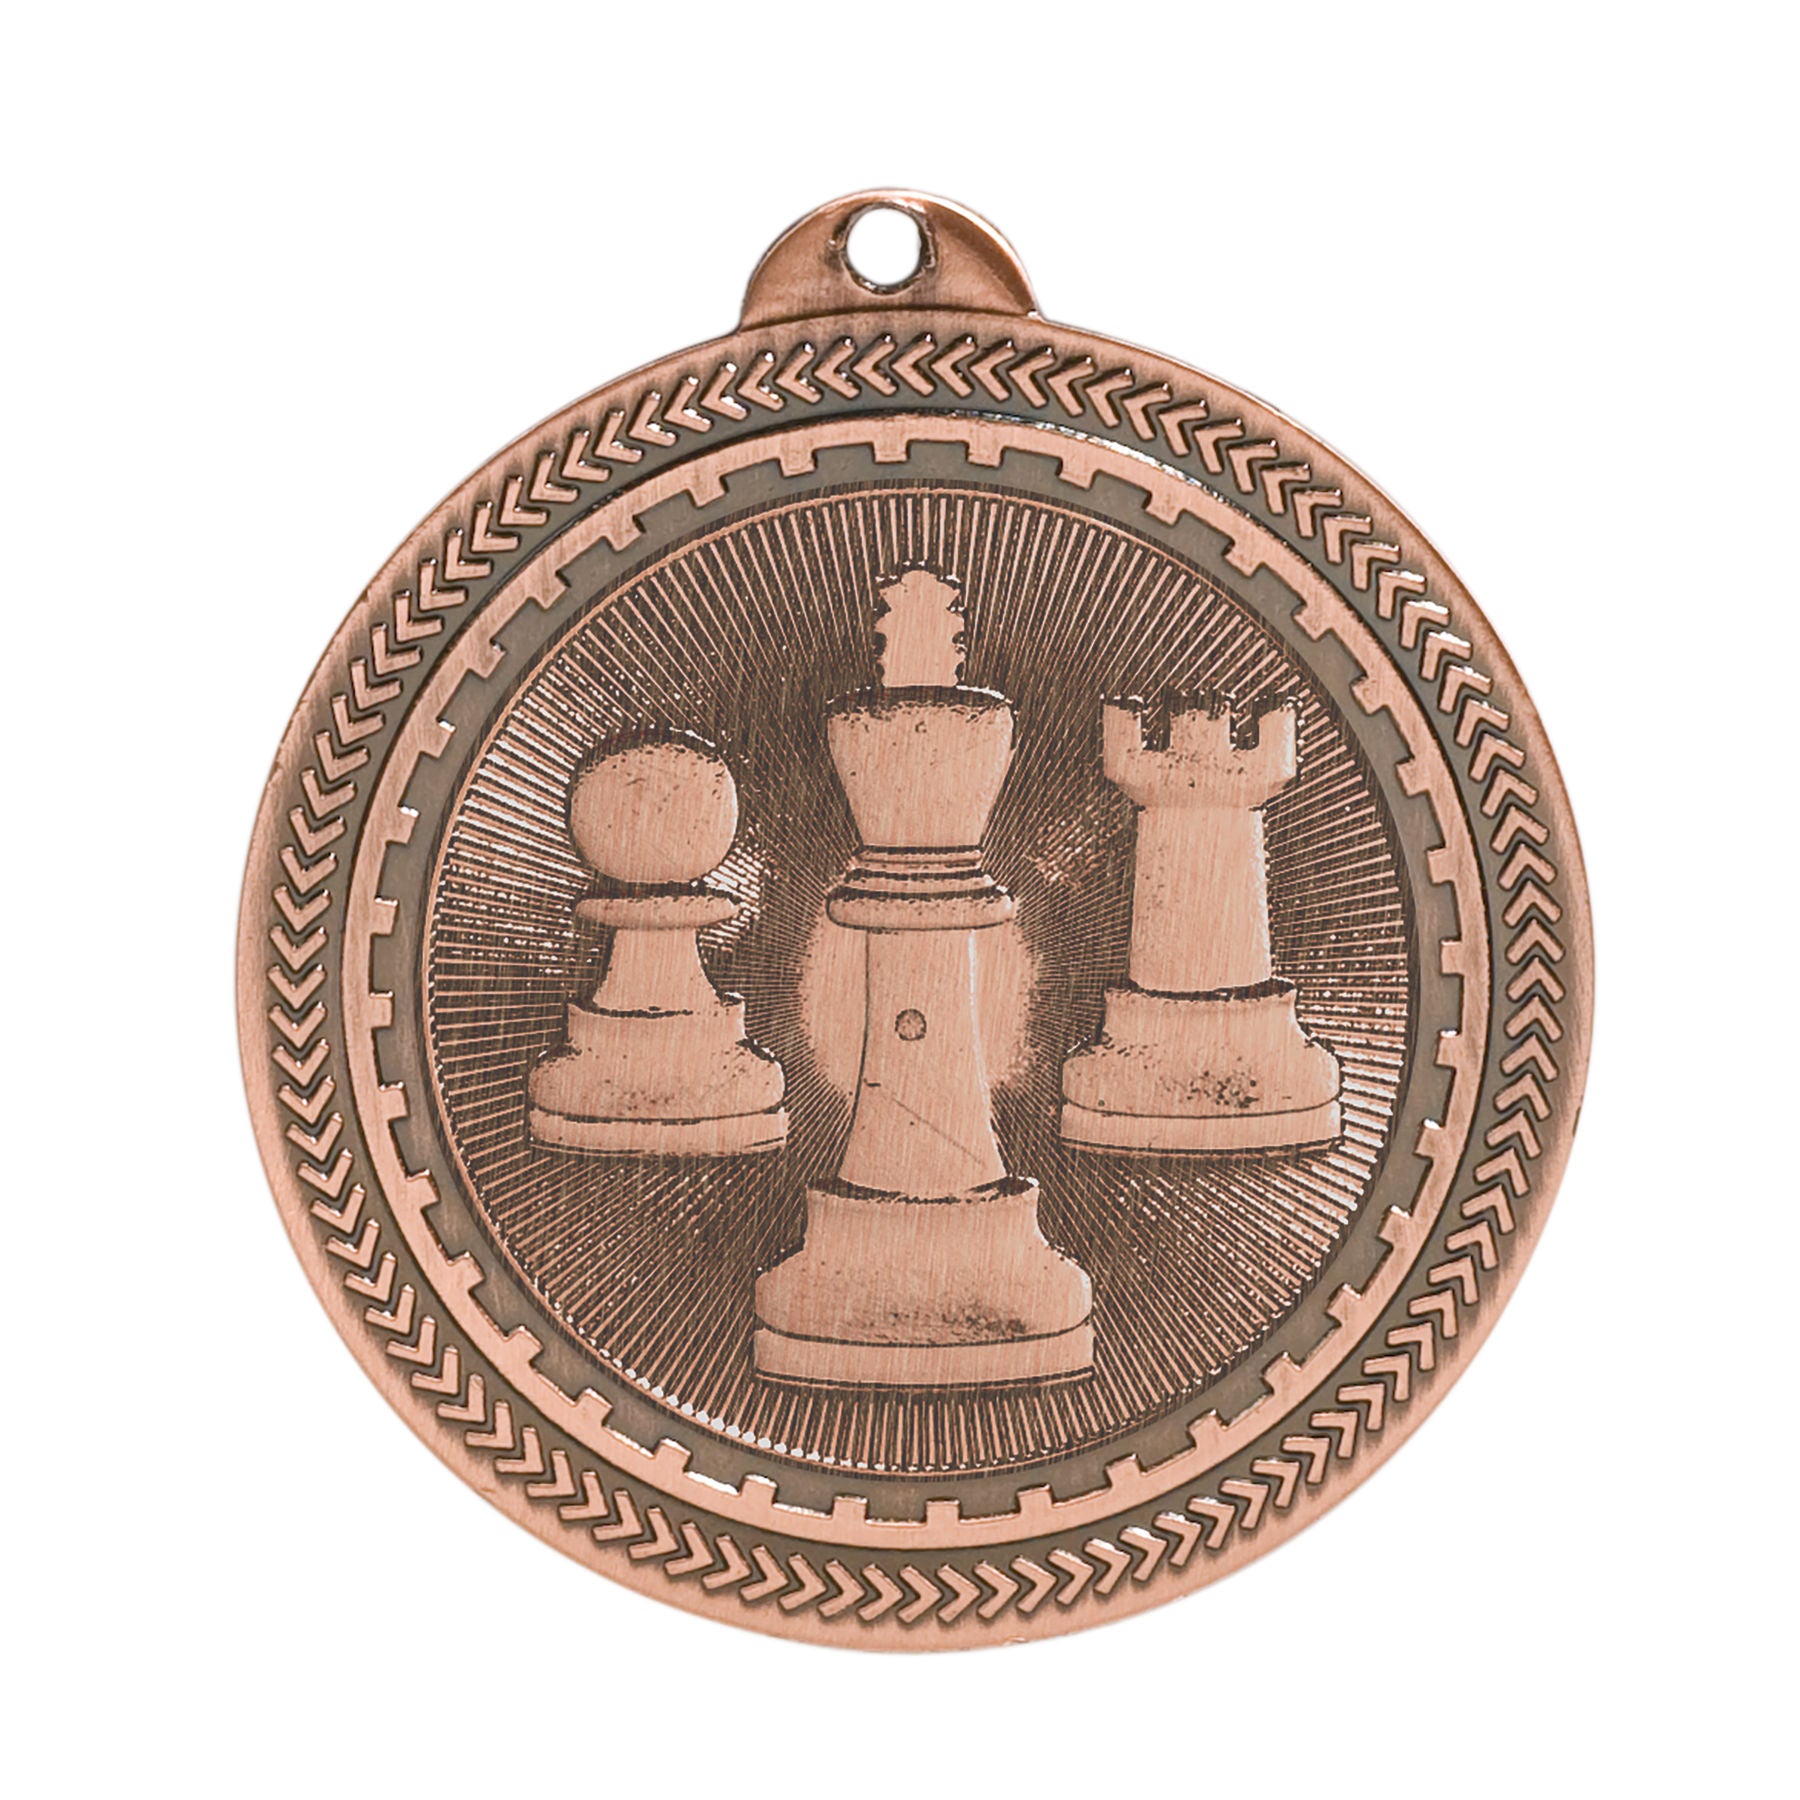 Chess Laserable BriteLazer Medal, 2" - Craftworks NW, LLC